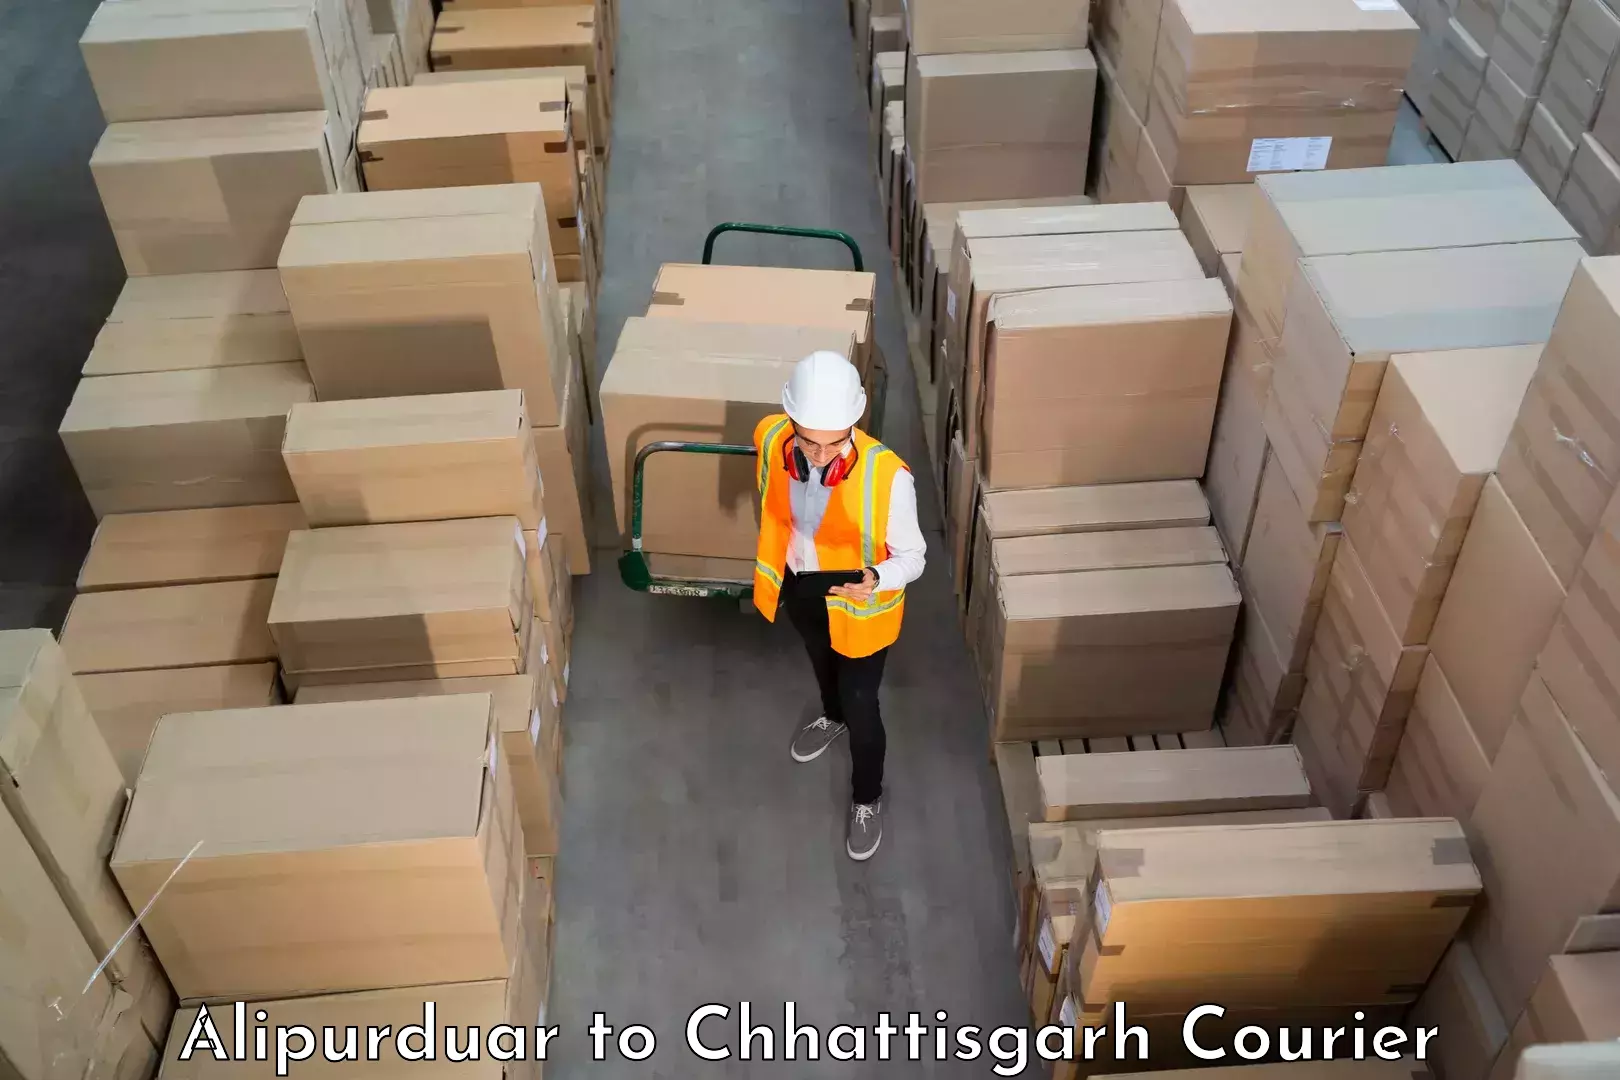 Furniture delivery service Alipurduar to Raipur